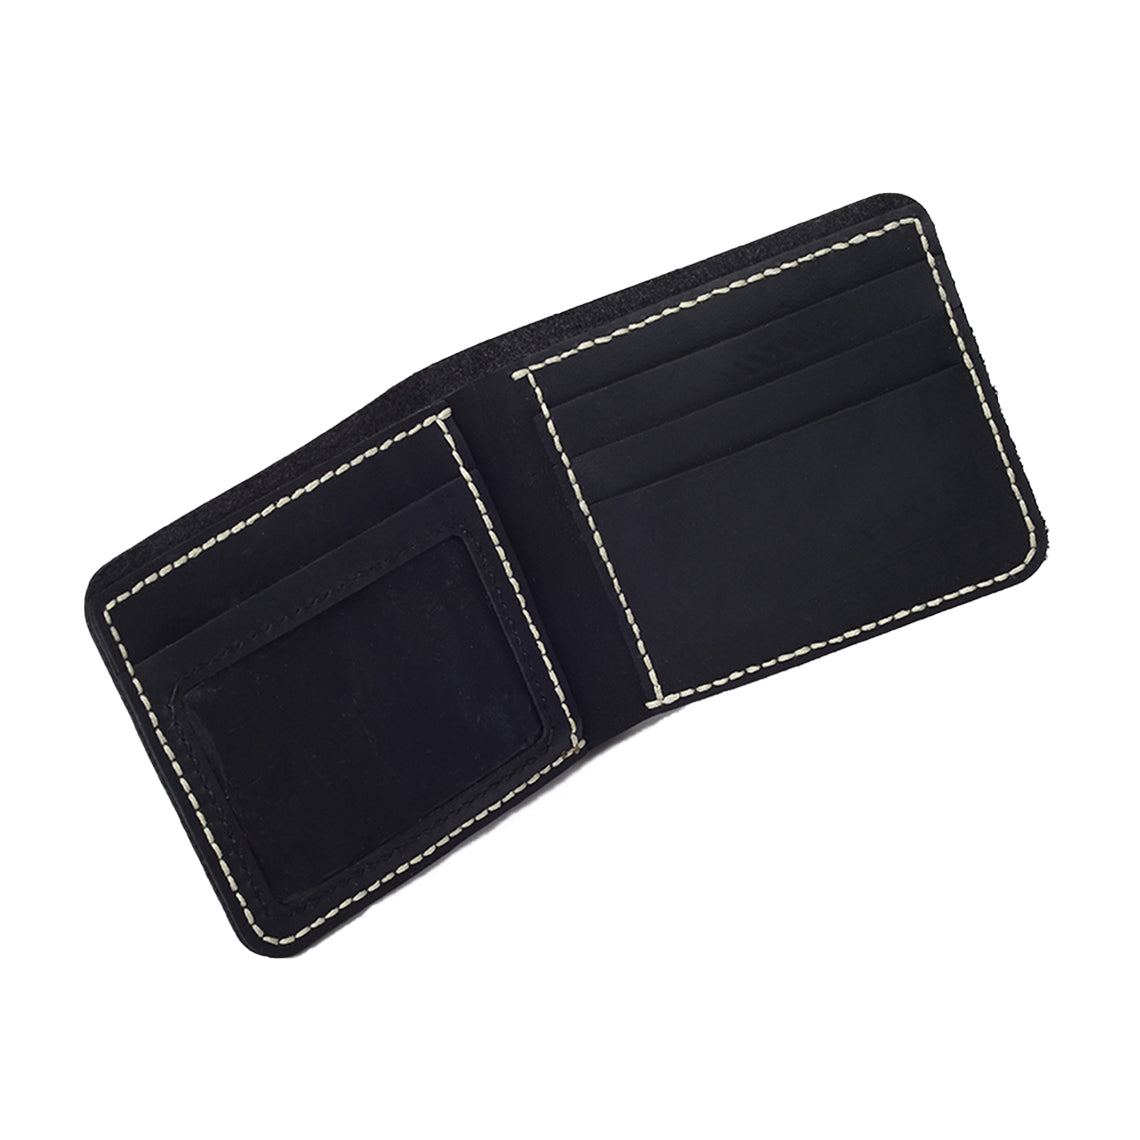 Black Leather Vintage Style Handmade Leather Wallet | DIY Wallet Making Kit - POPSEWING™